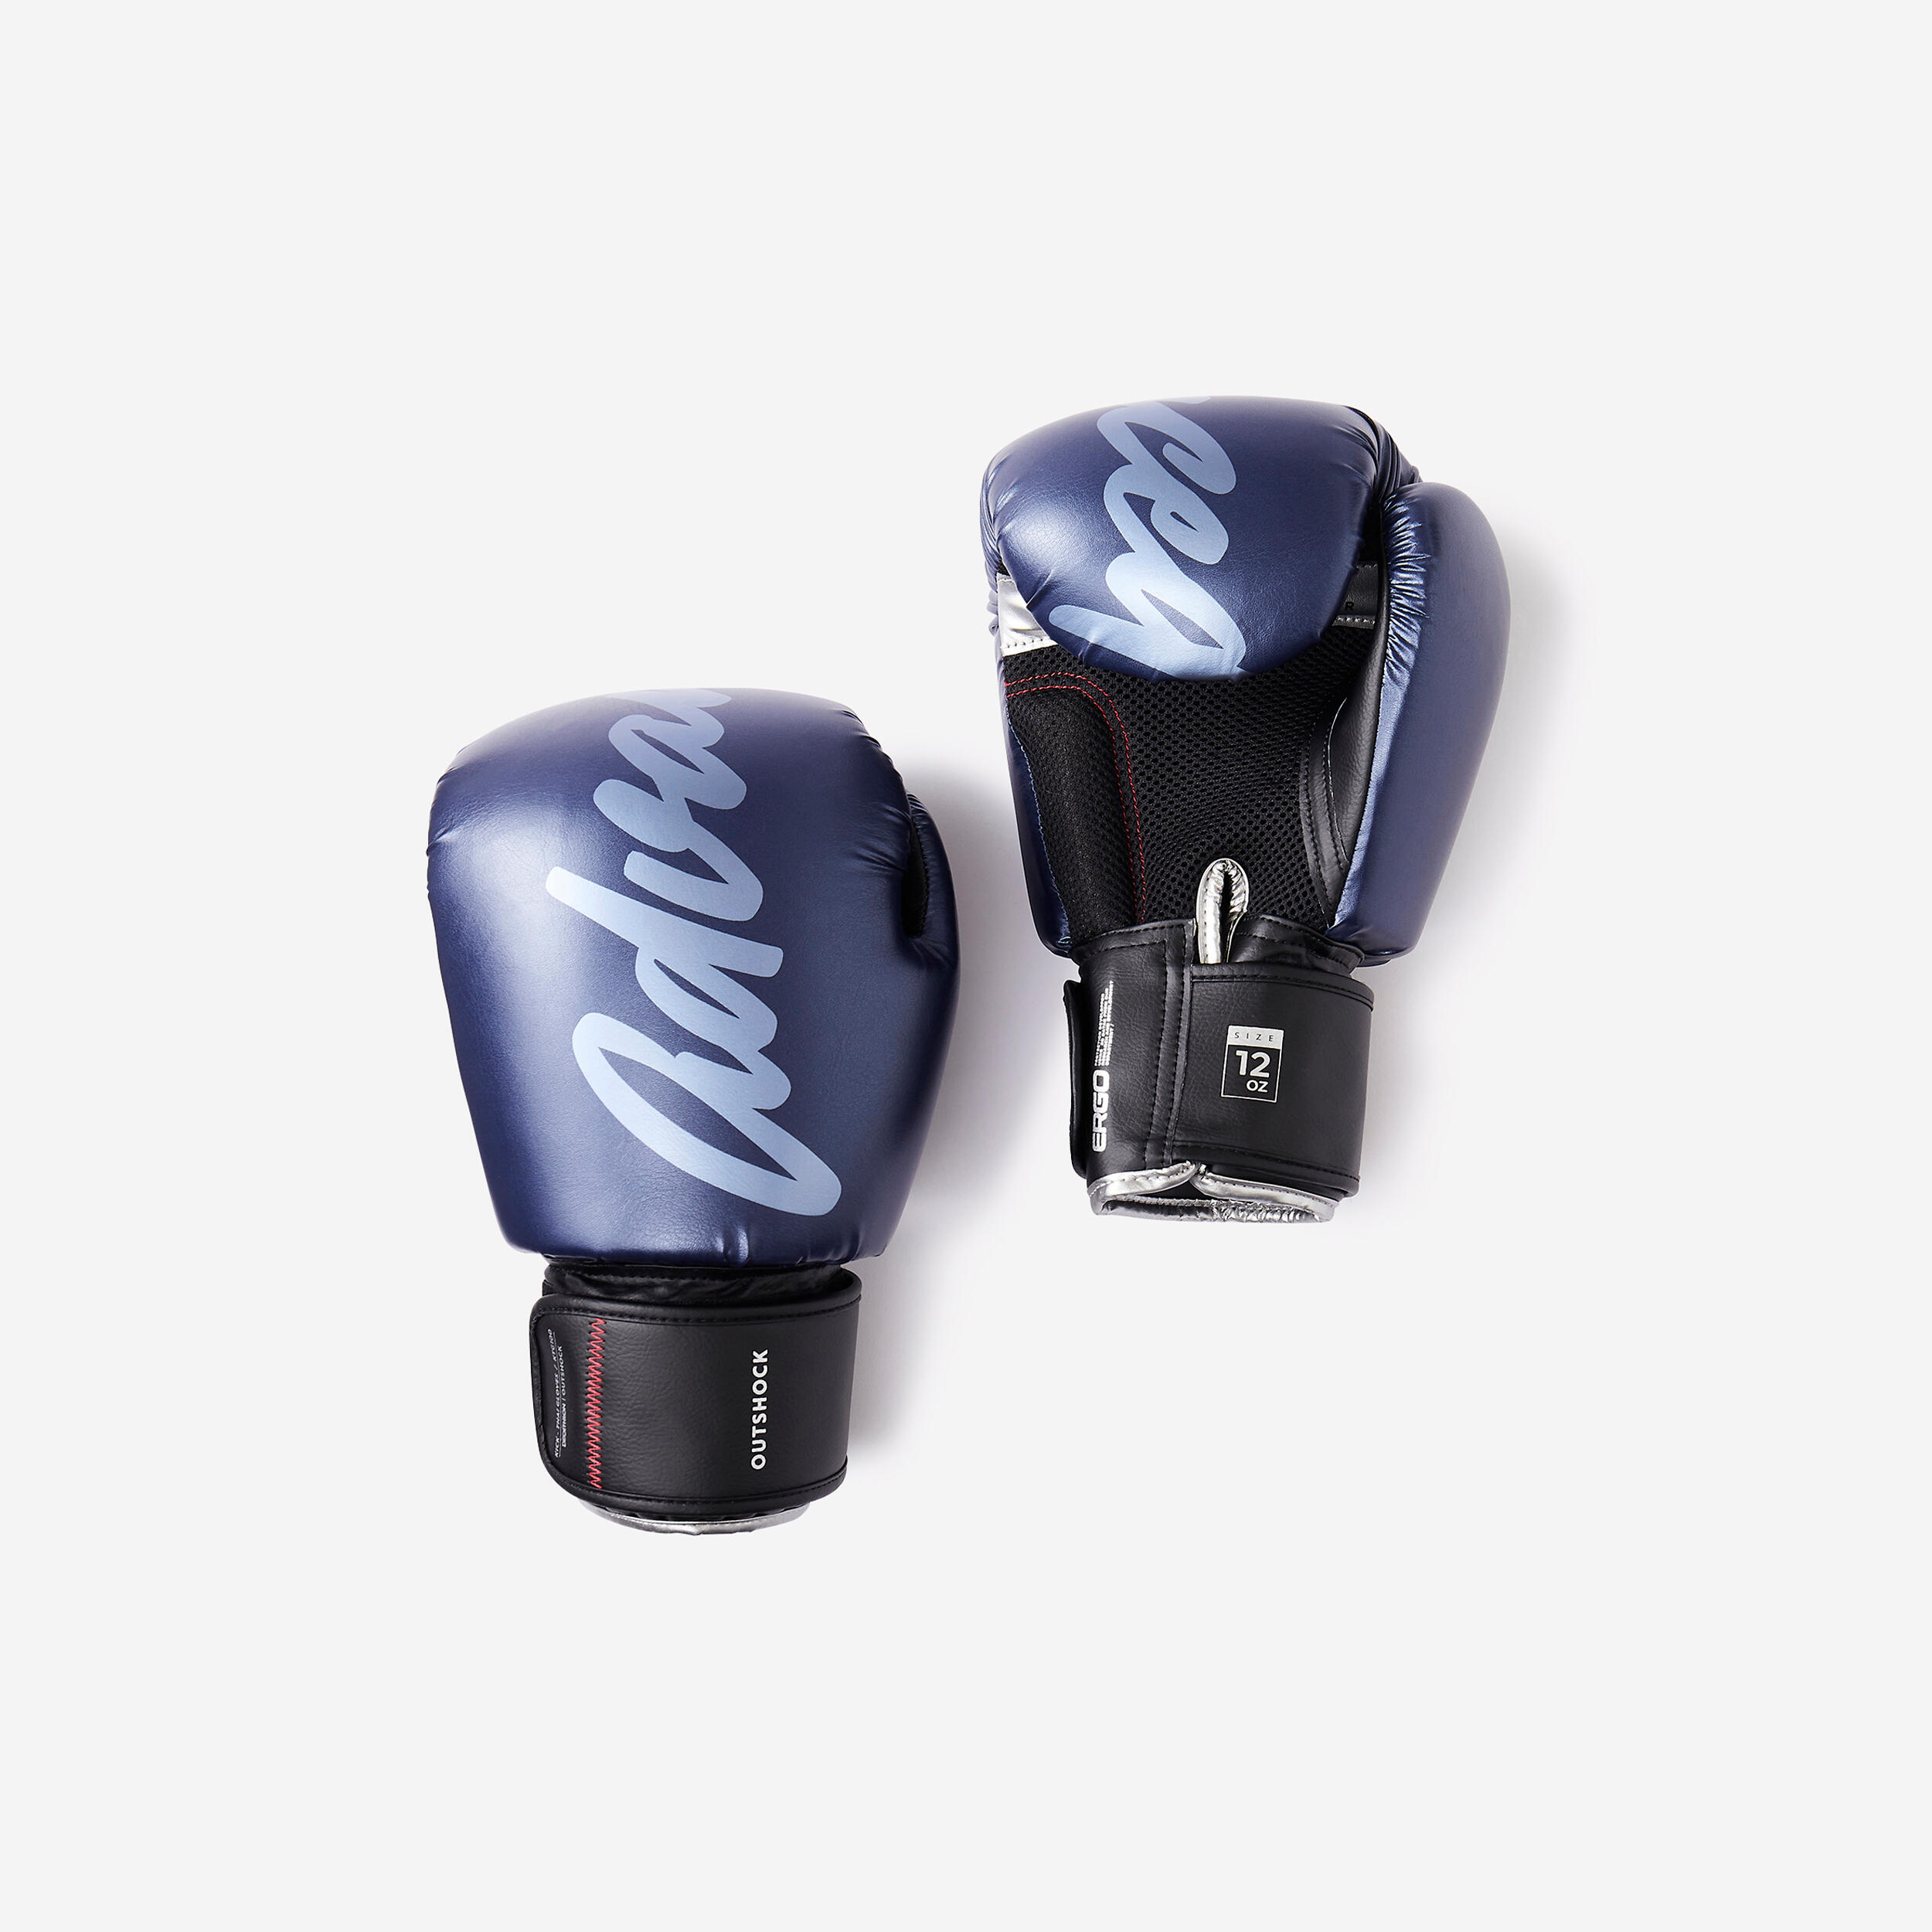 OUTSHOCK Kickboxing/Muay Thai Gloves - Blue